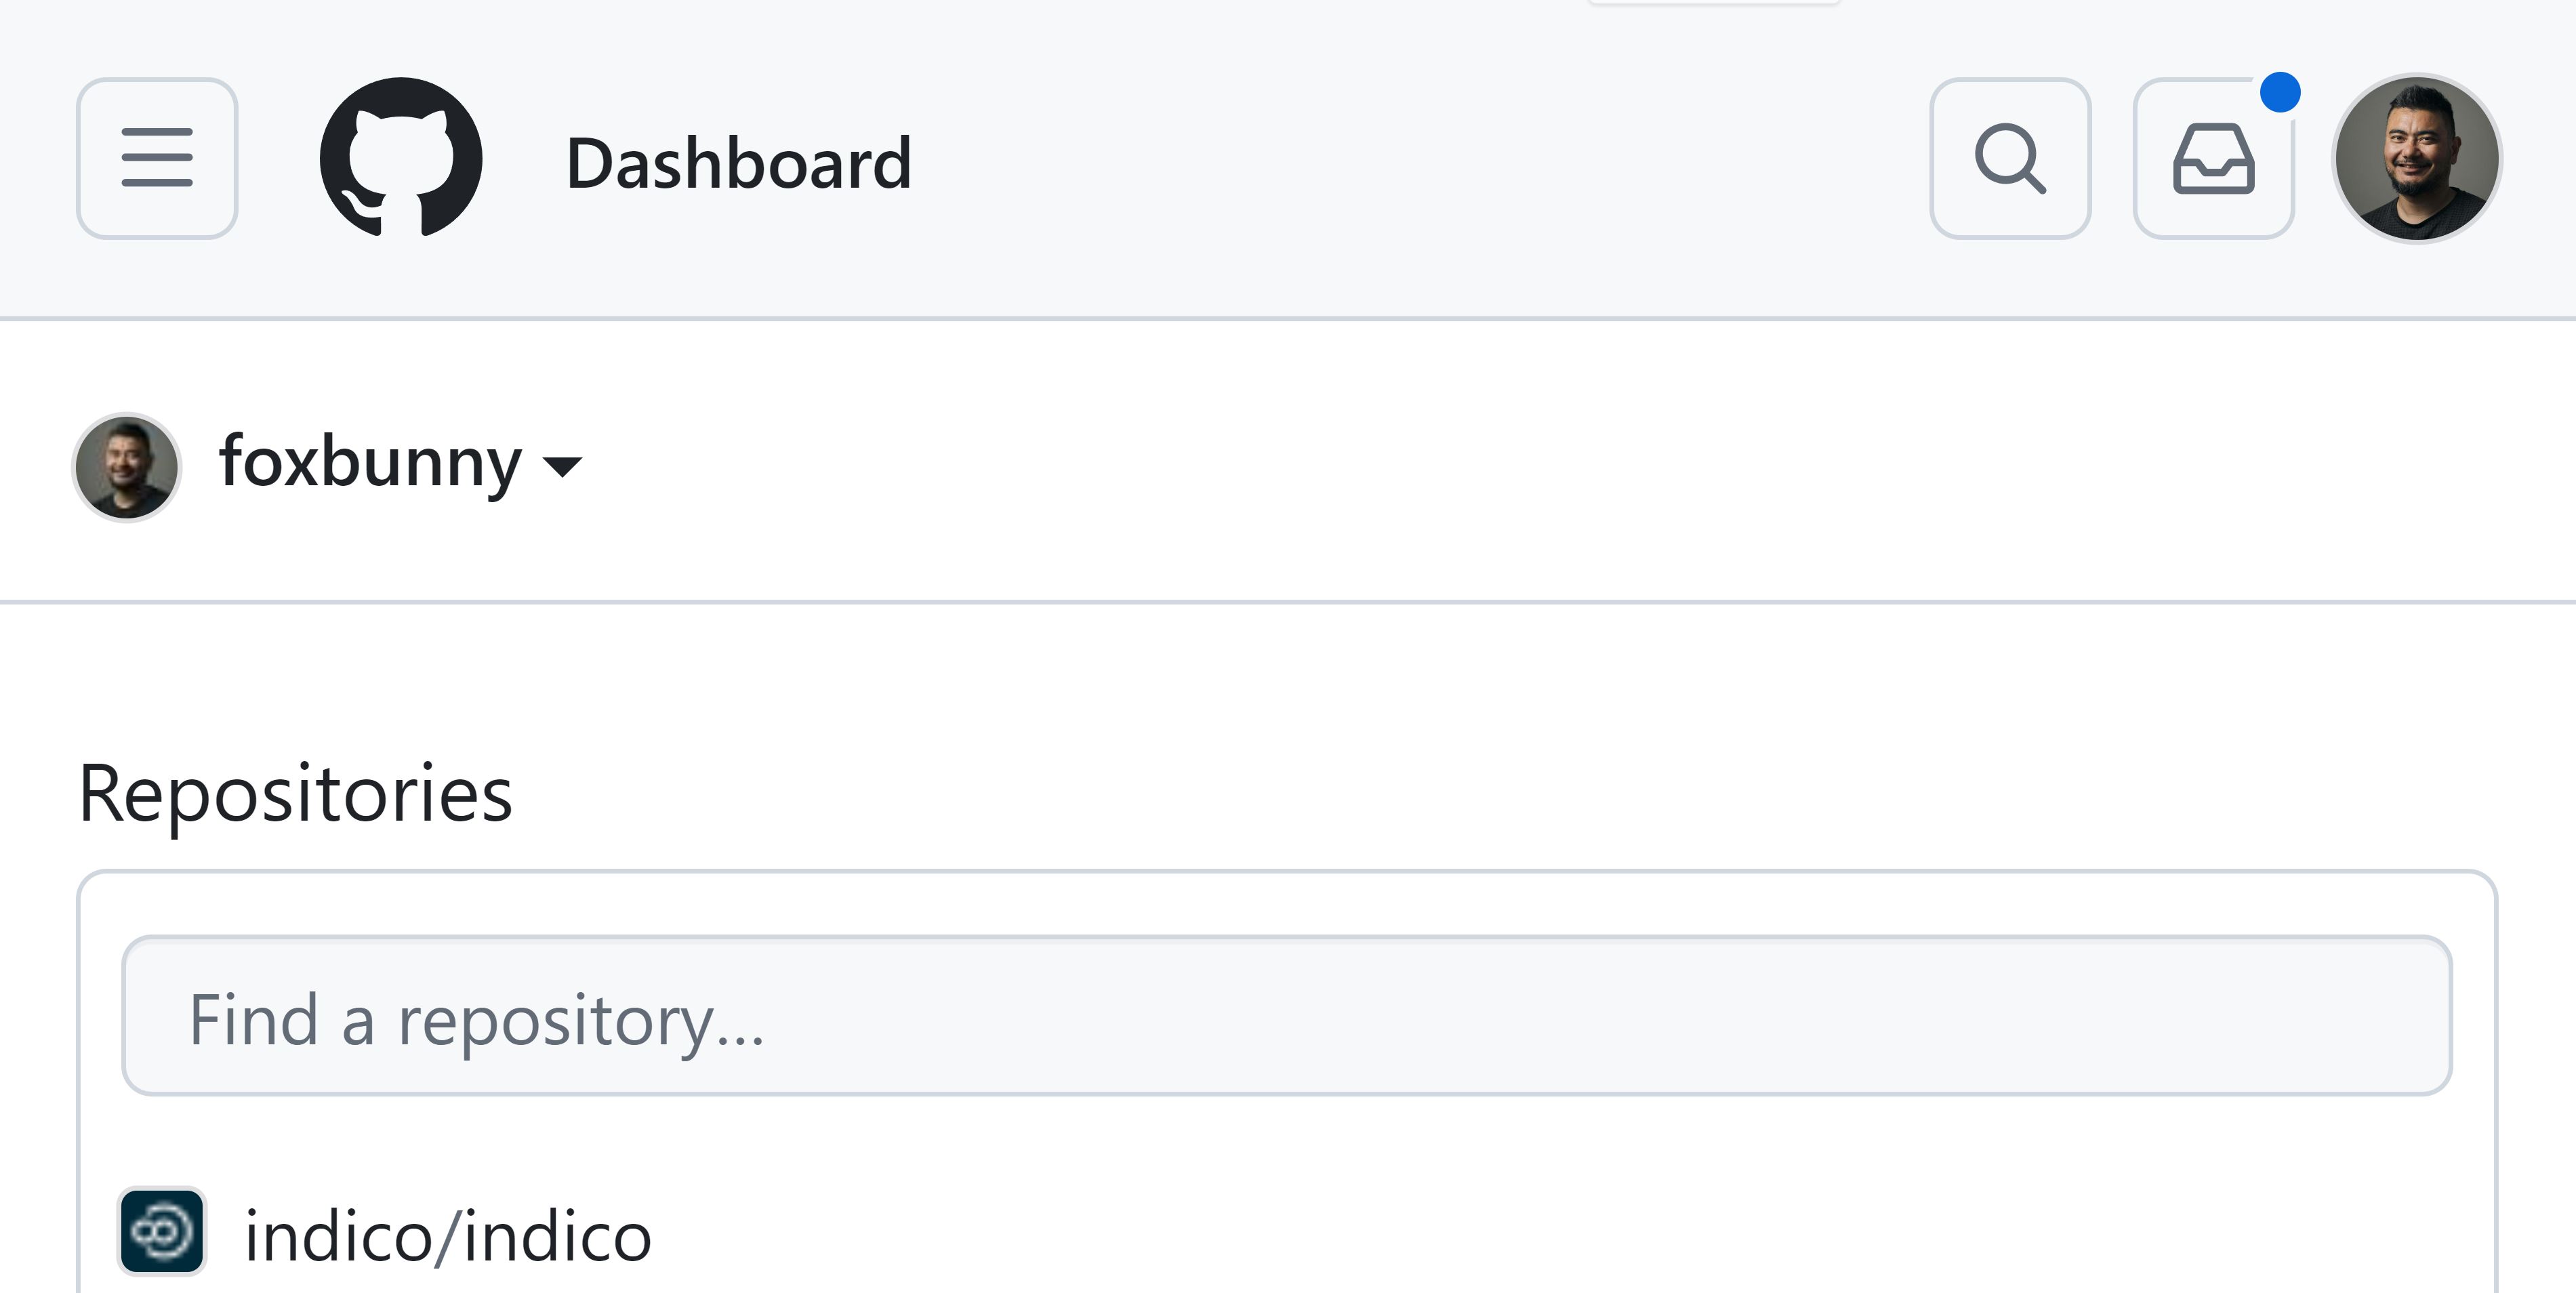 GitHub dashboard zoomed in 500%